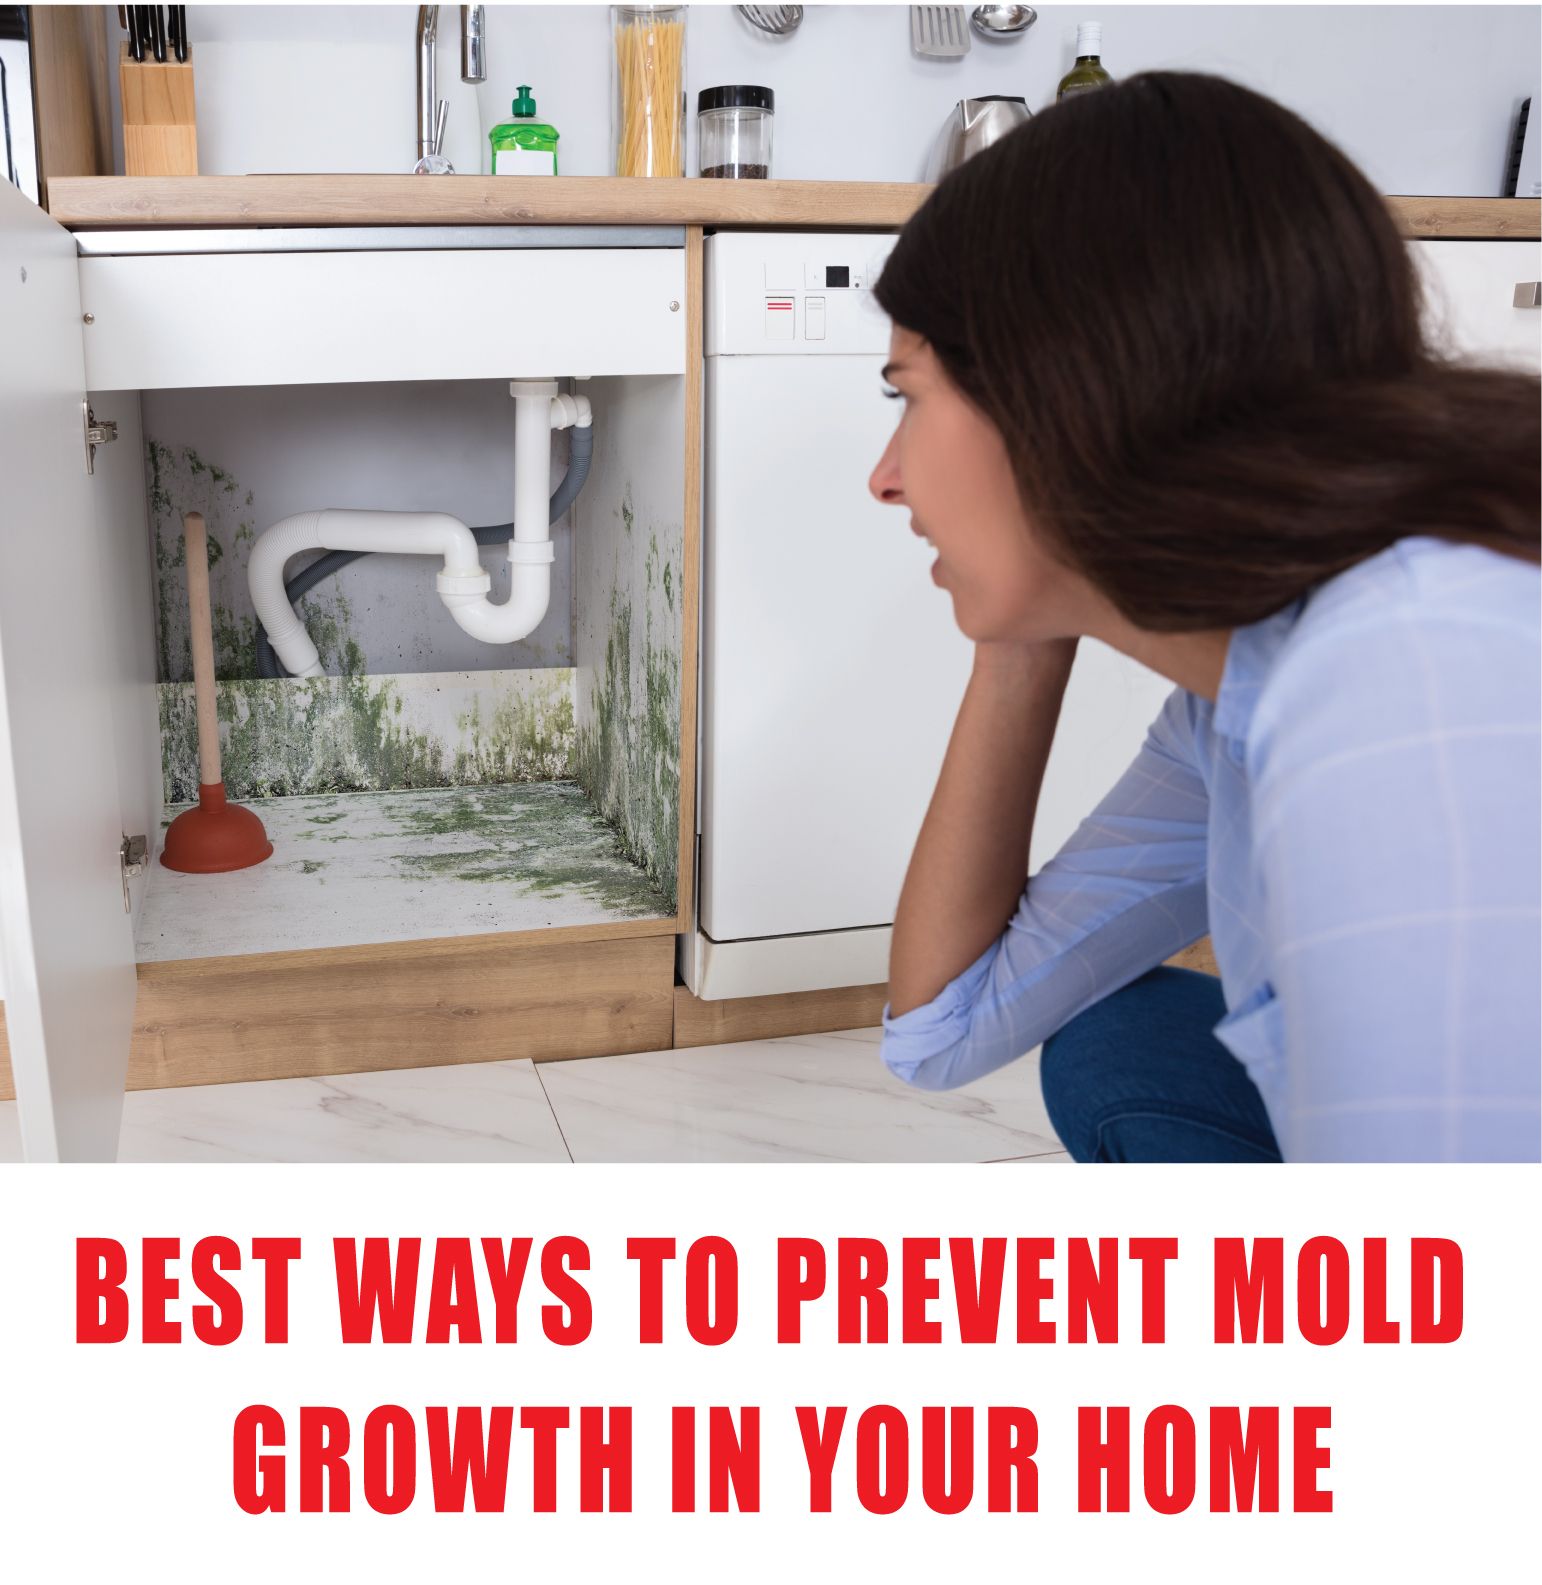 Mold Prevention Tips: Don